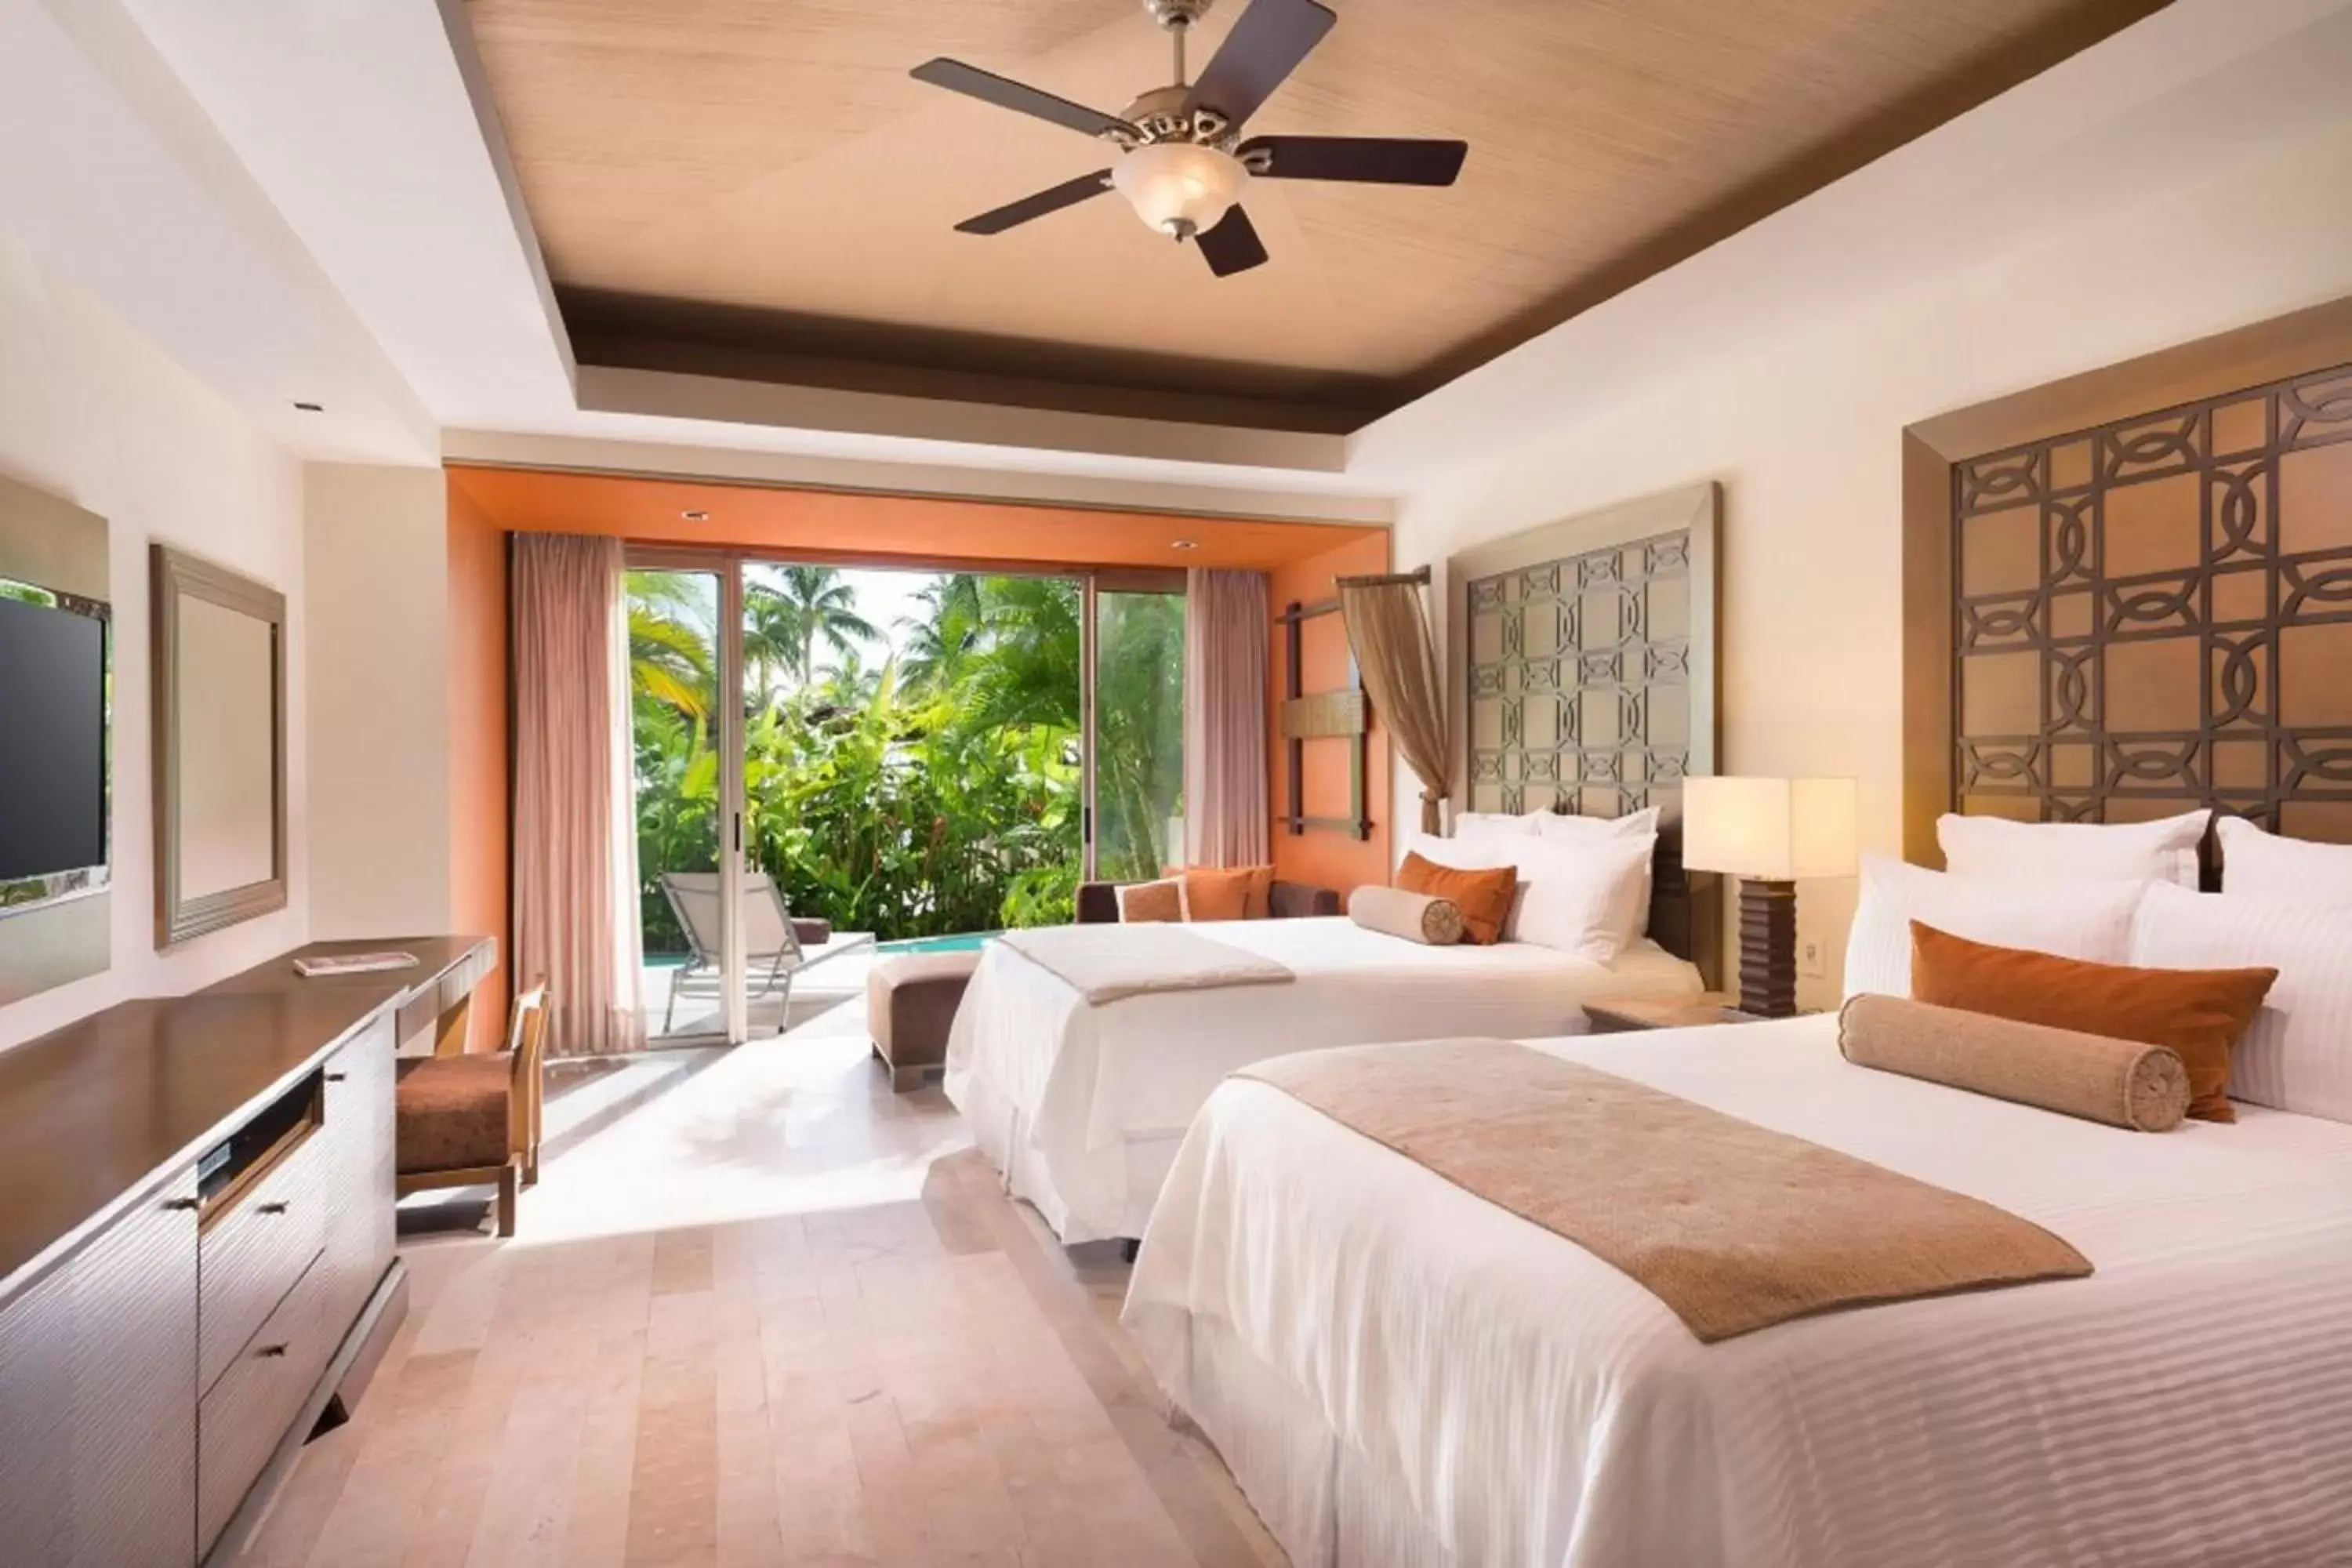 Bed in Dreams Vallarta Bay Resorts & Spa - All Inclusive